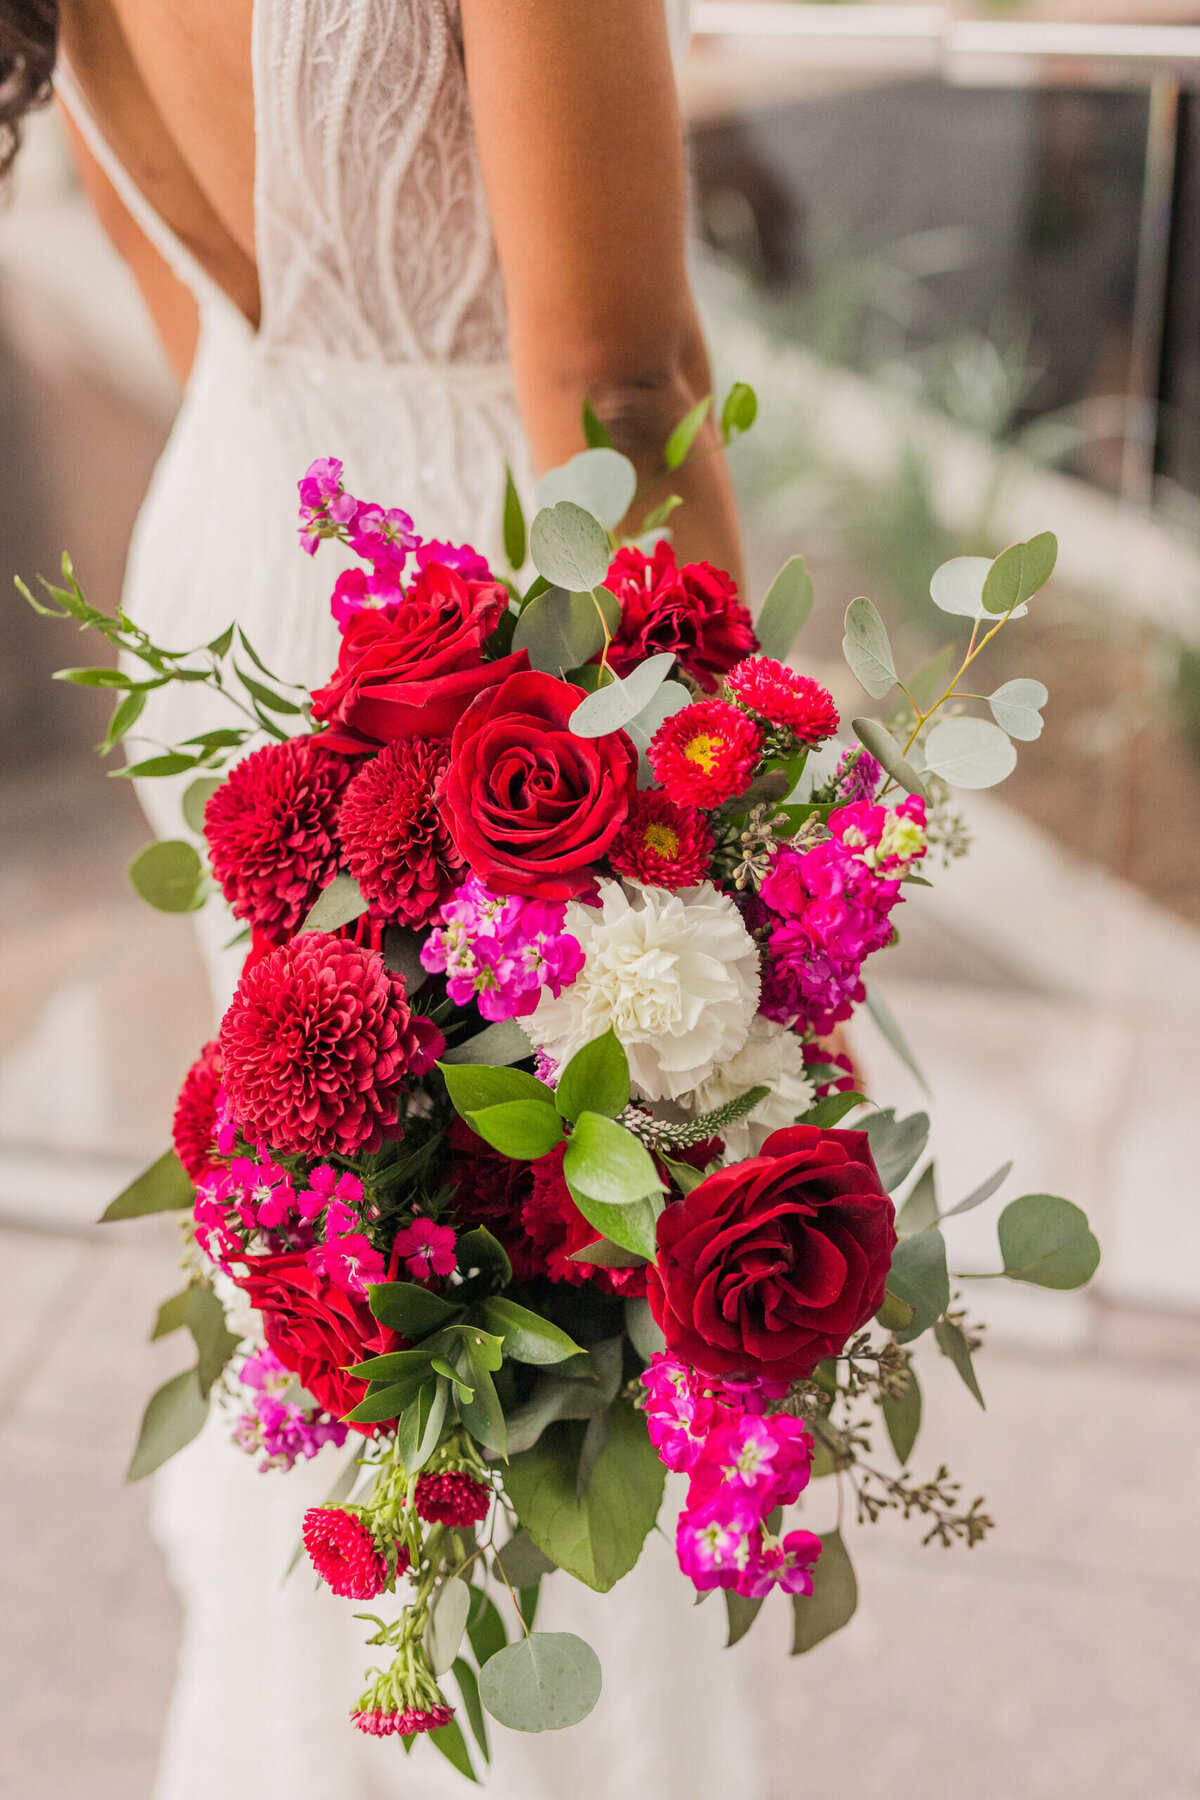 adriana_texas-old-town-austin-wedding-florist-35-scaled